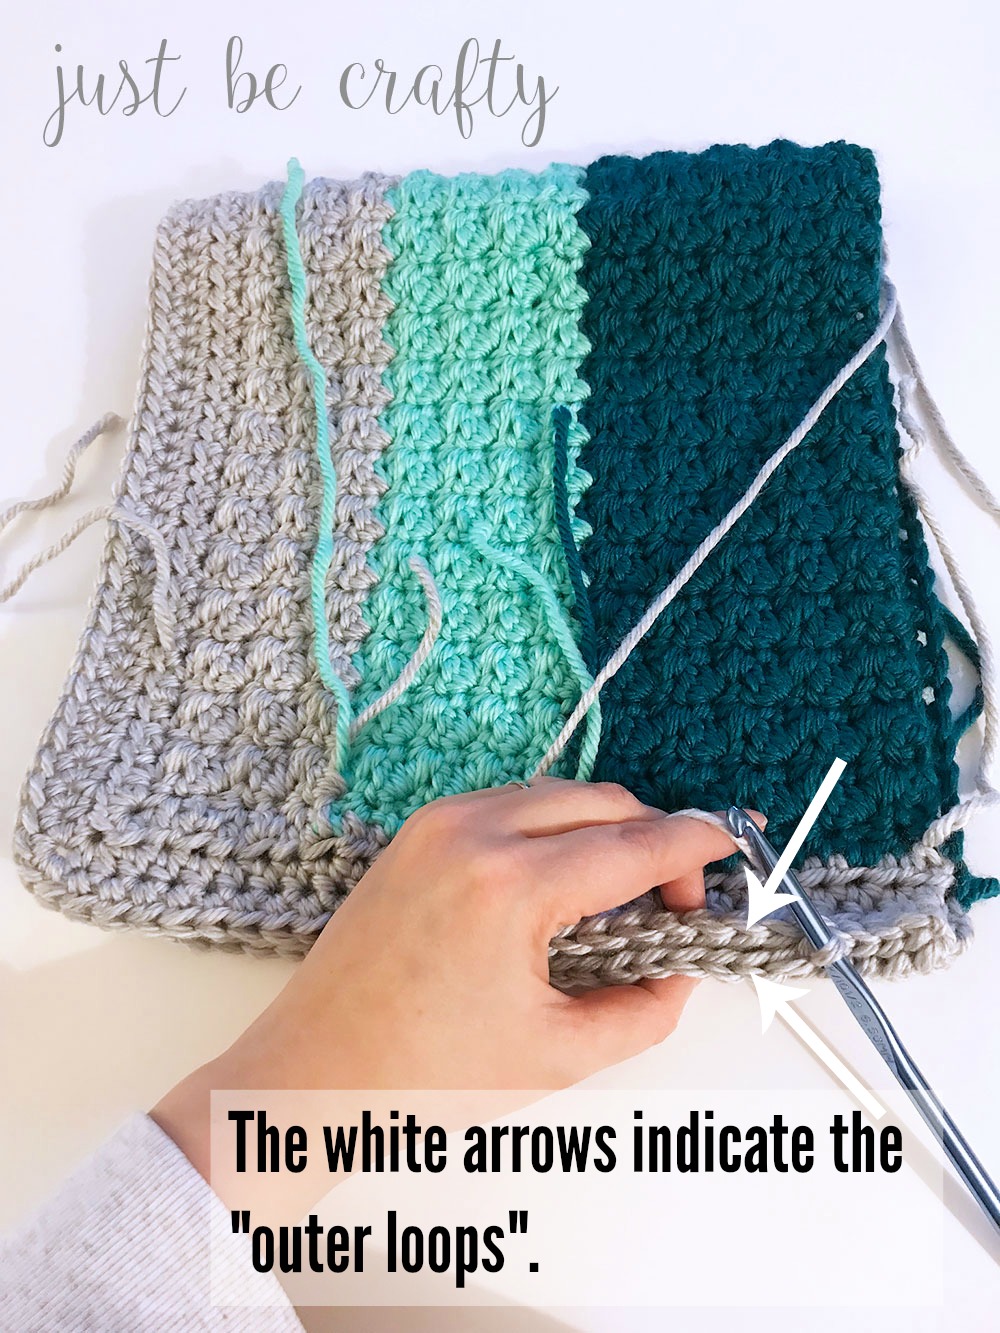 Mint Color Block Crochet Cowl